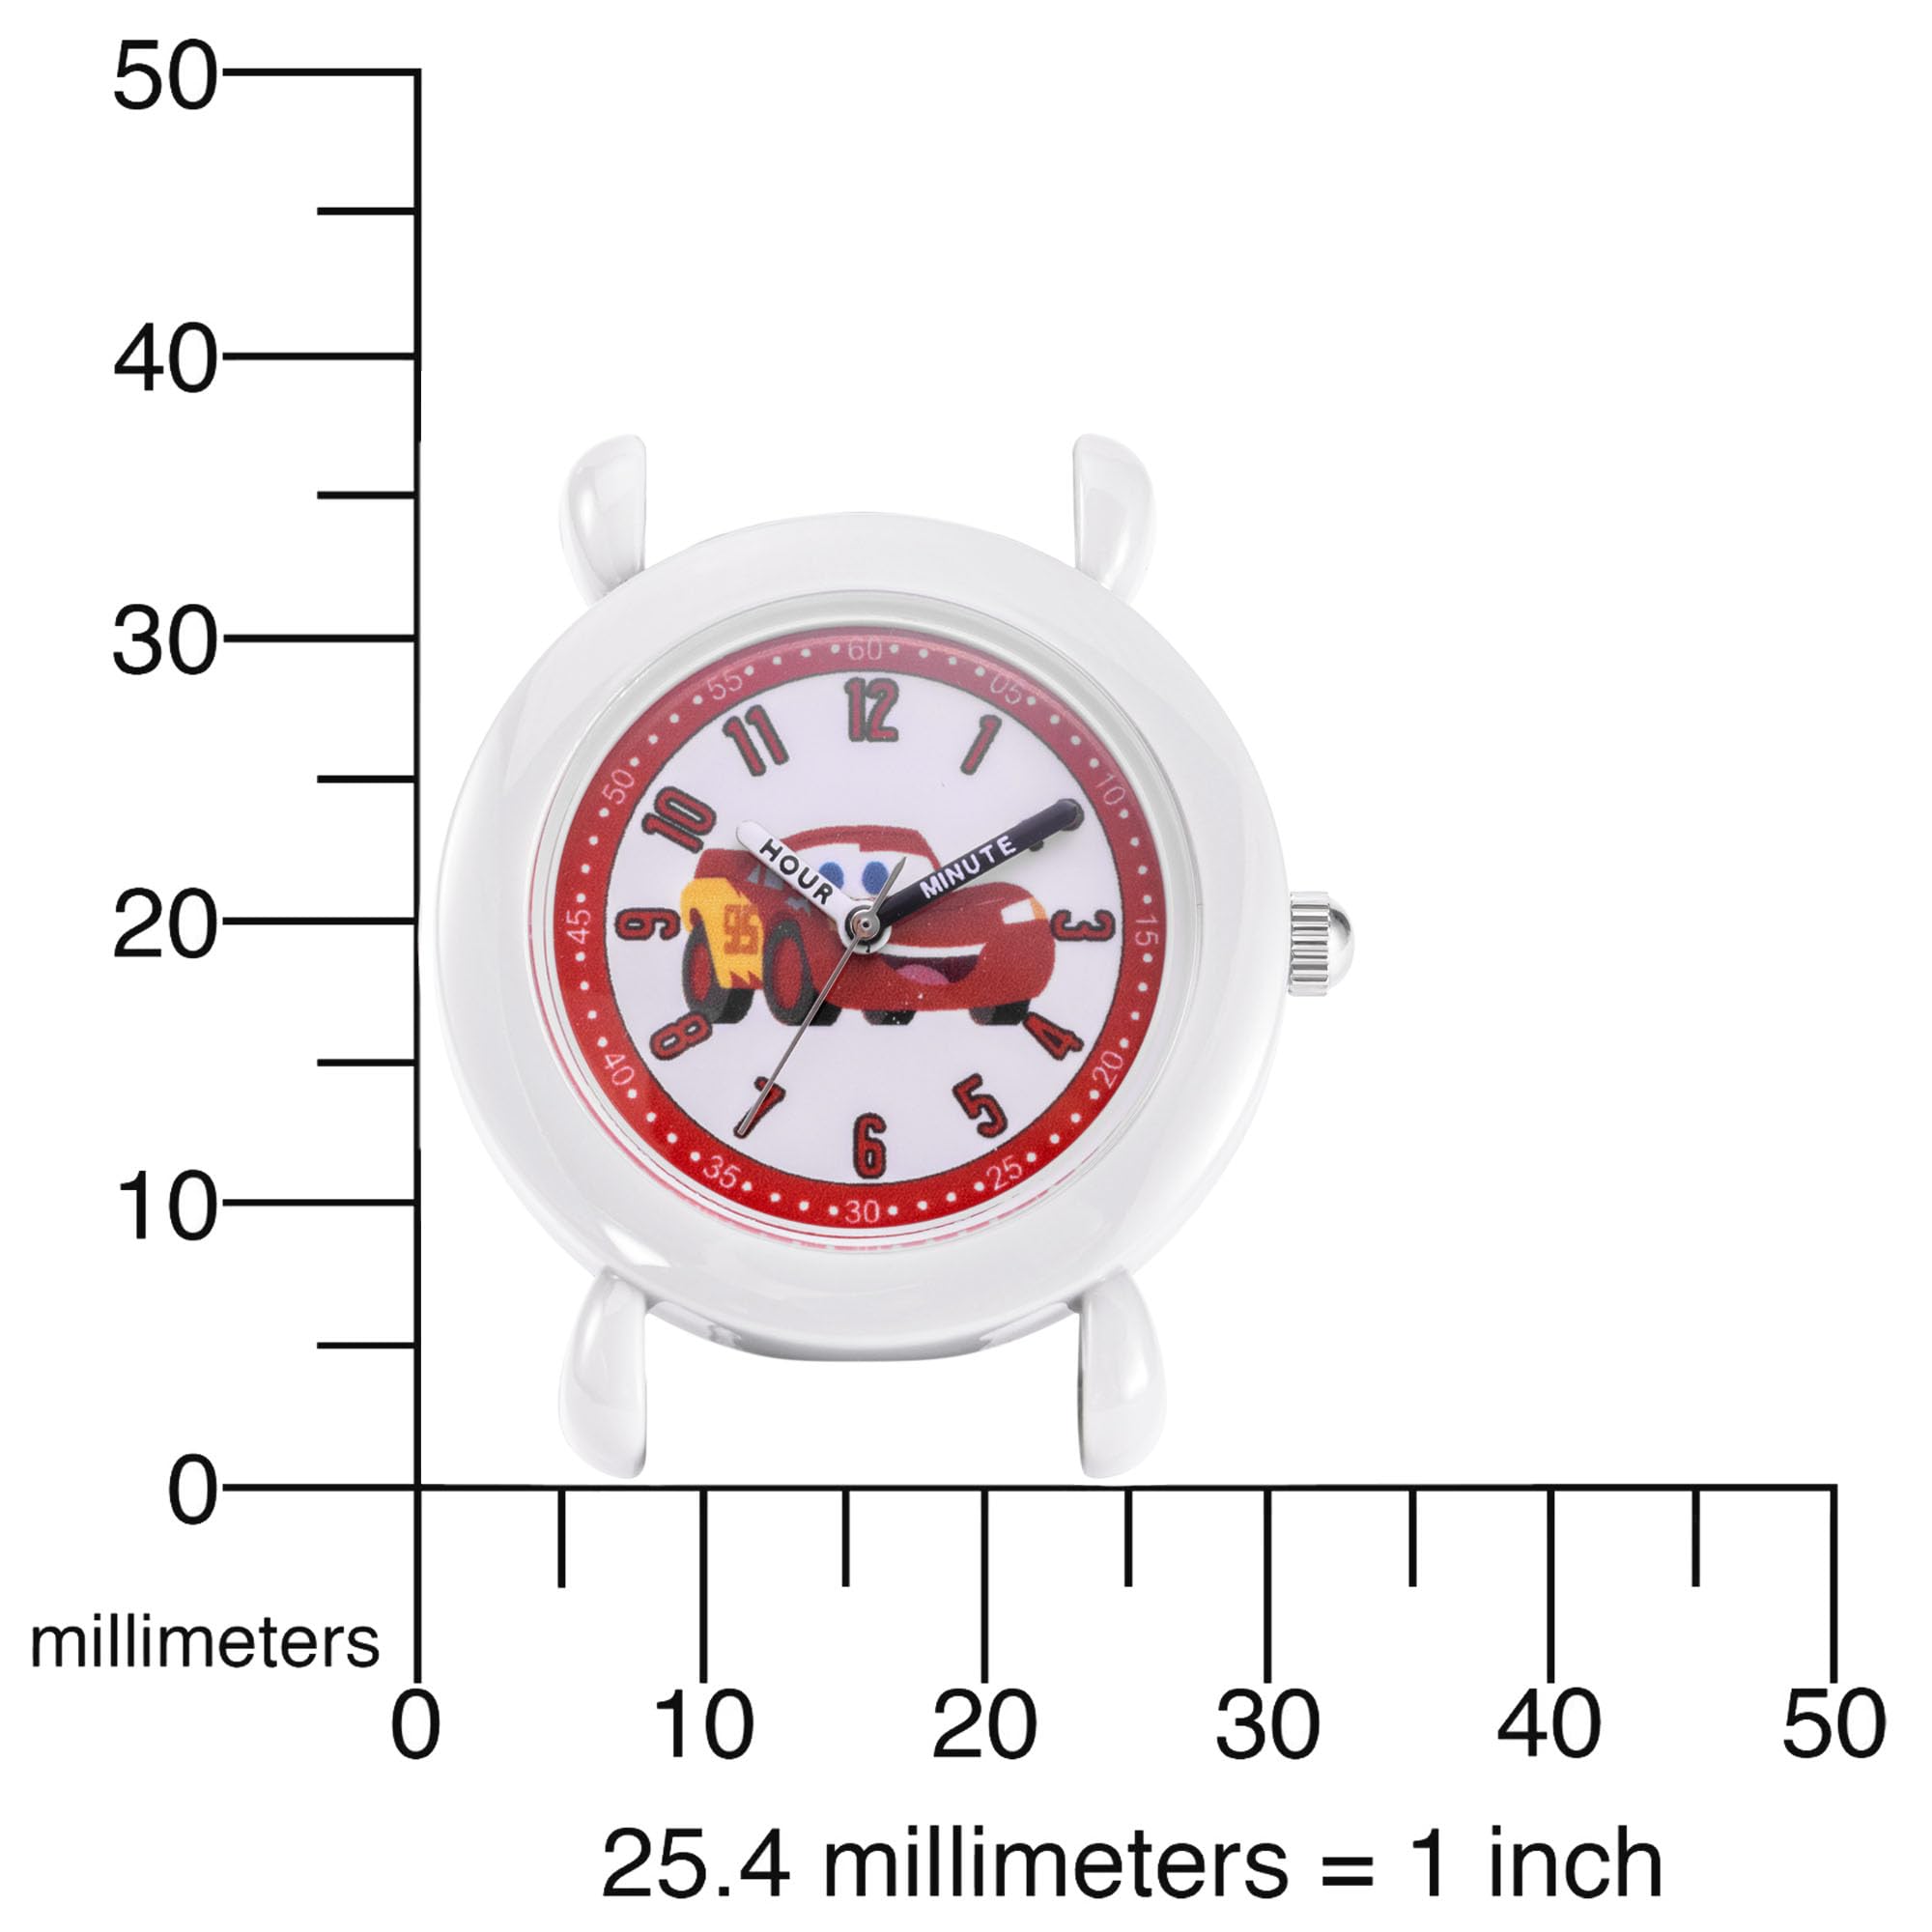 Disney 100 Kids' Plastic Time Teacher Analog Quartz Silicone Strap Watch